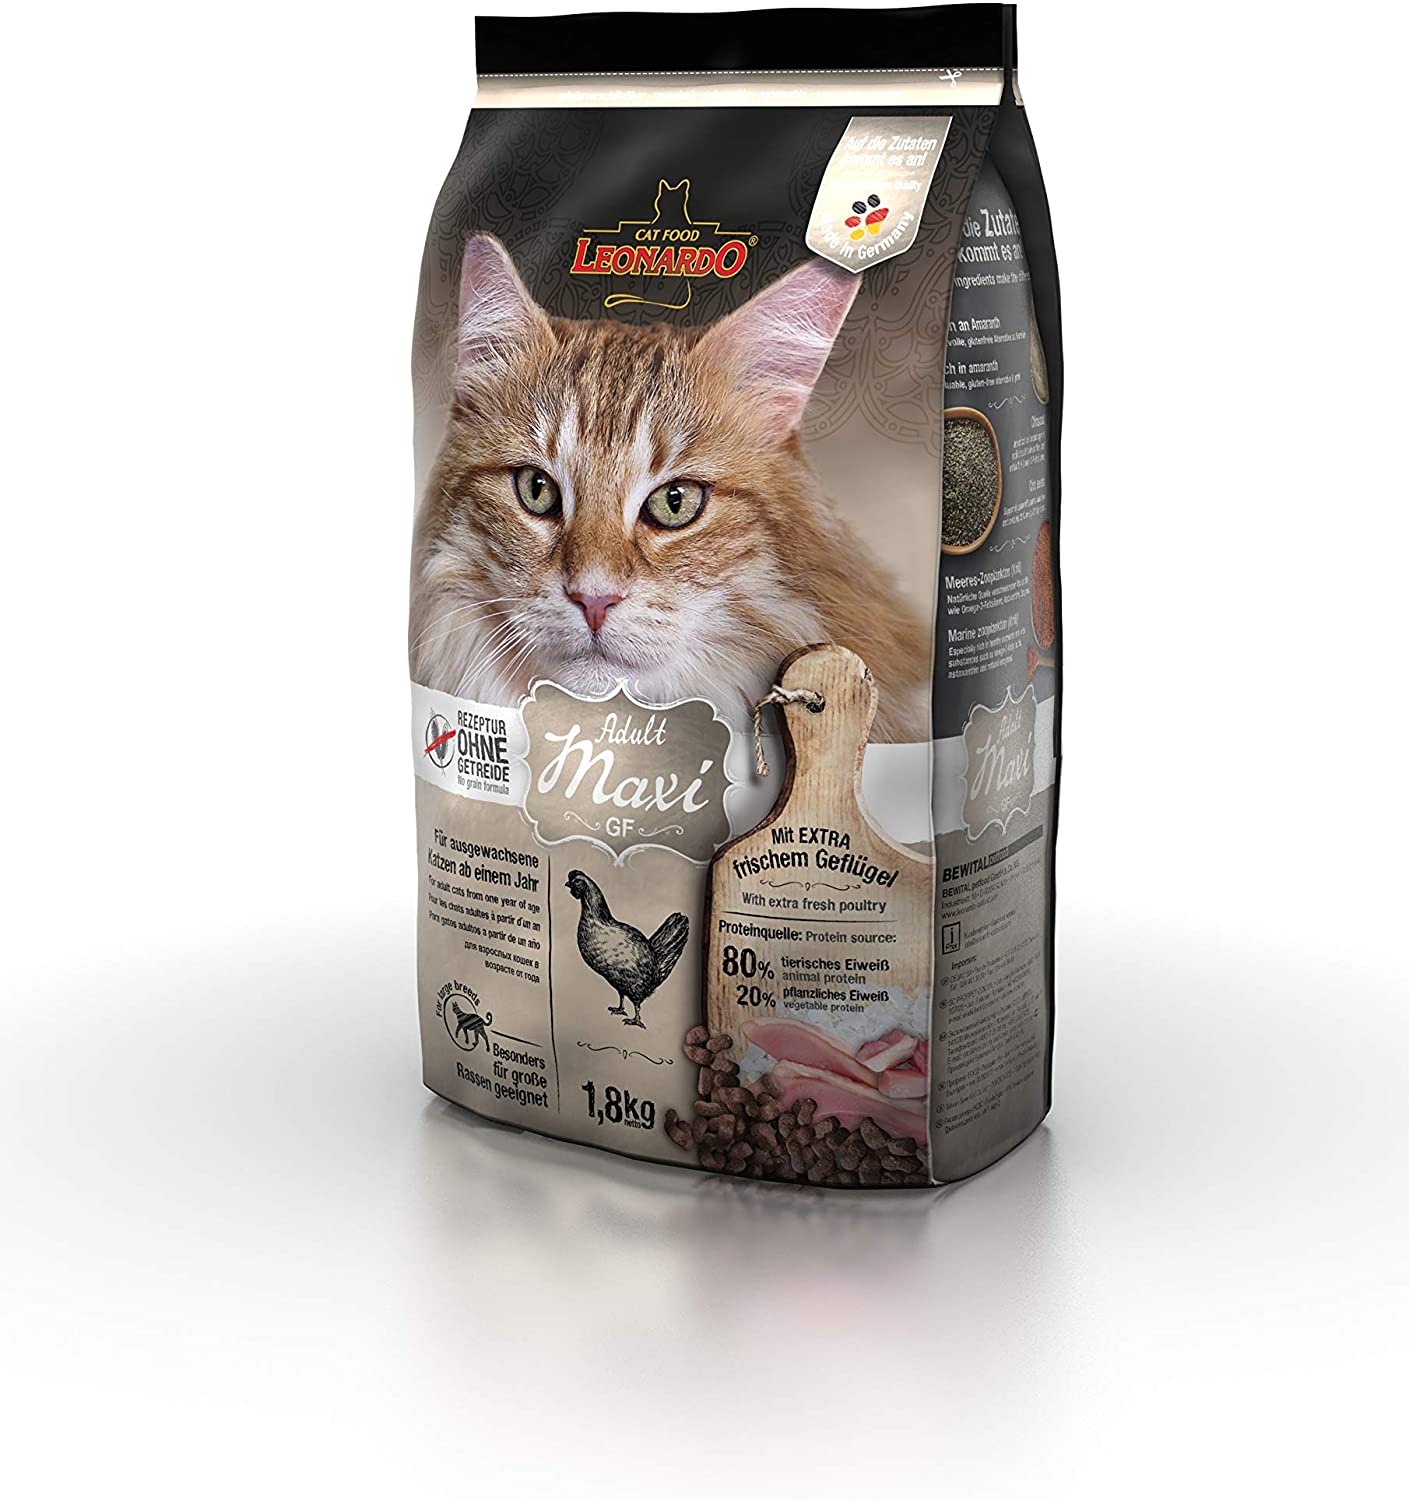  Belcando Leonardo Feline Adult Grain Free Maxi 1,8Kg 1800 g 